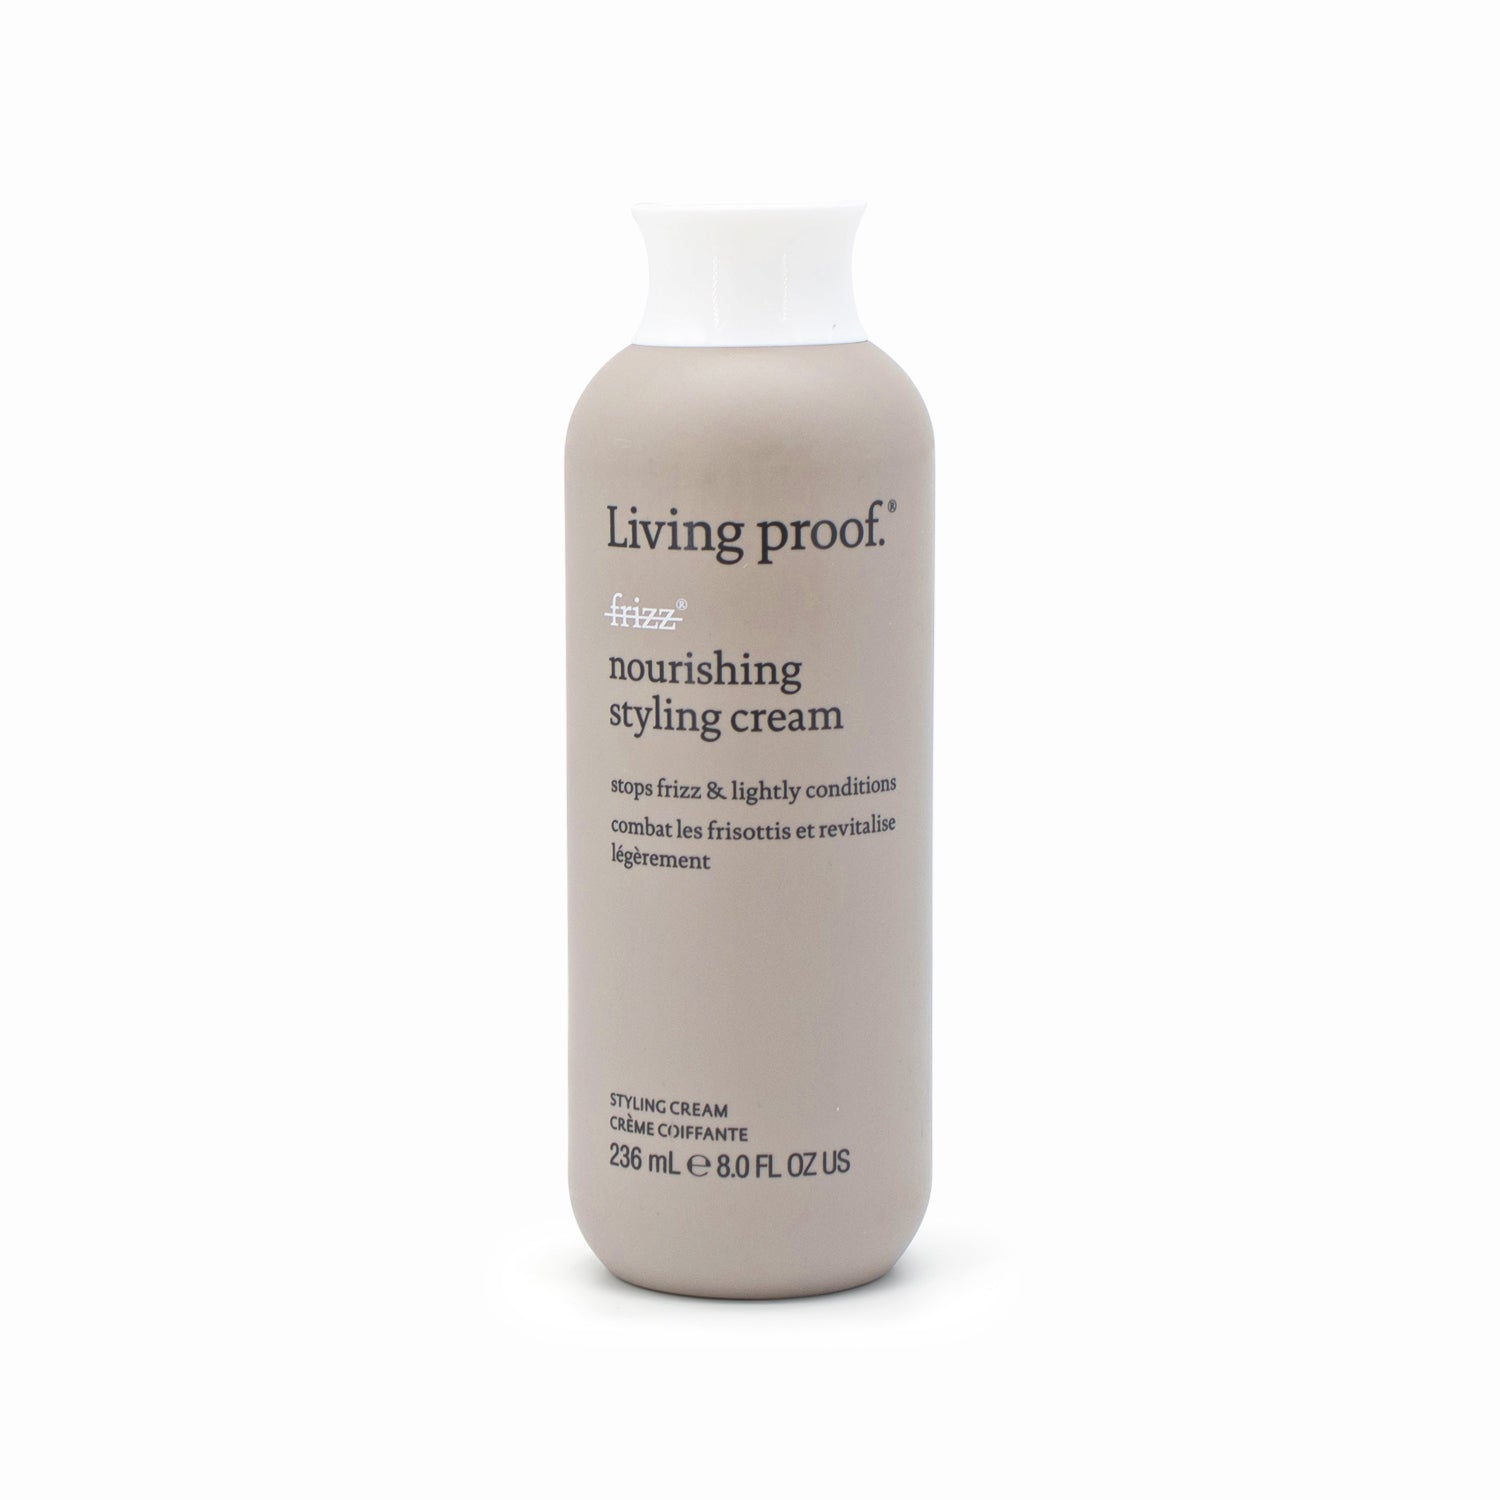 Living proof No Frizz Nourishing Styling Cream 8oz - New